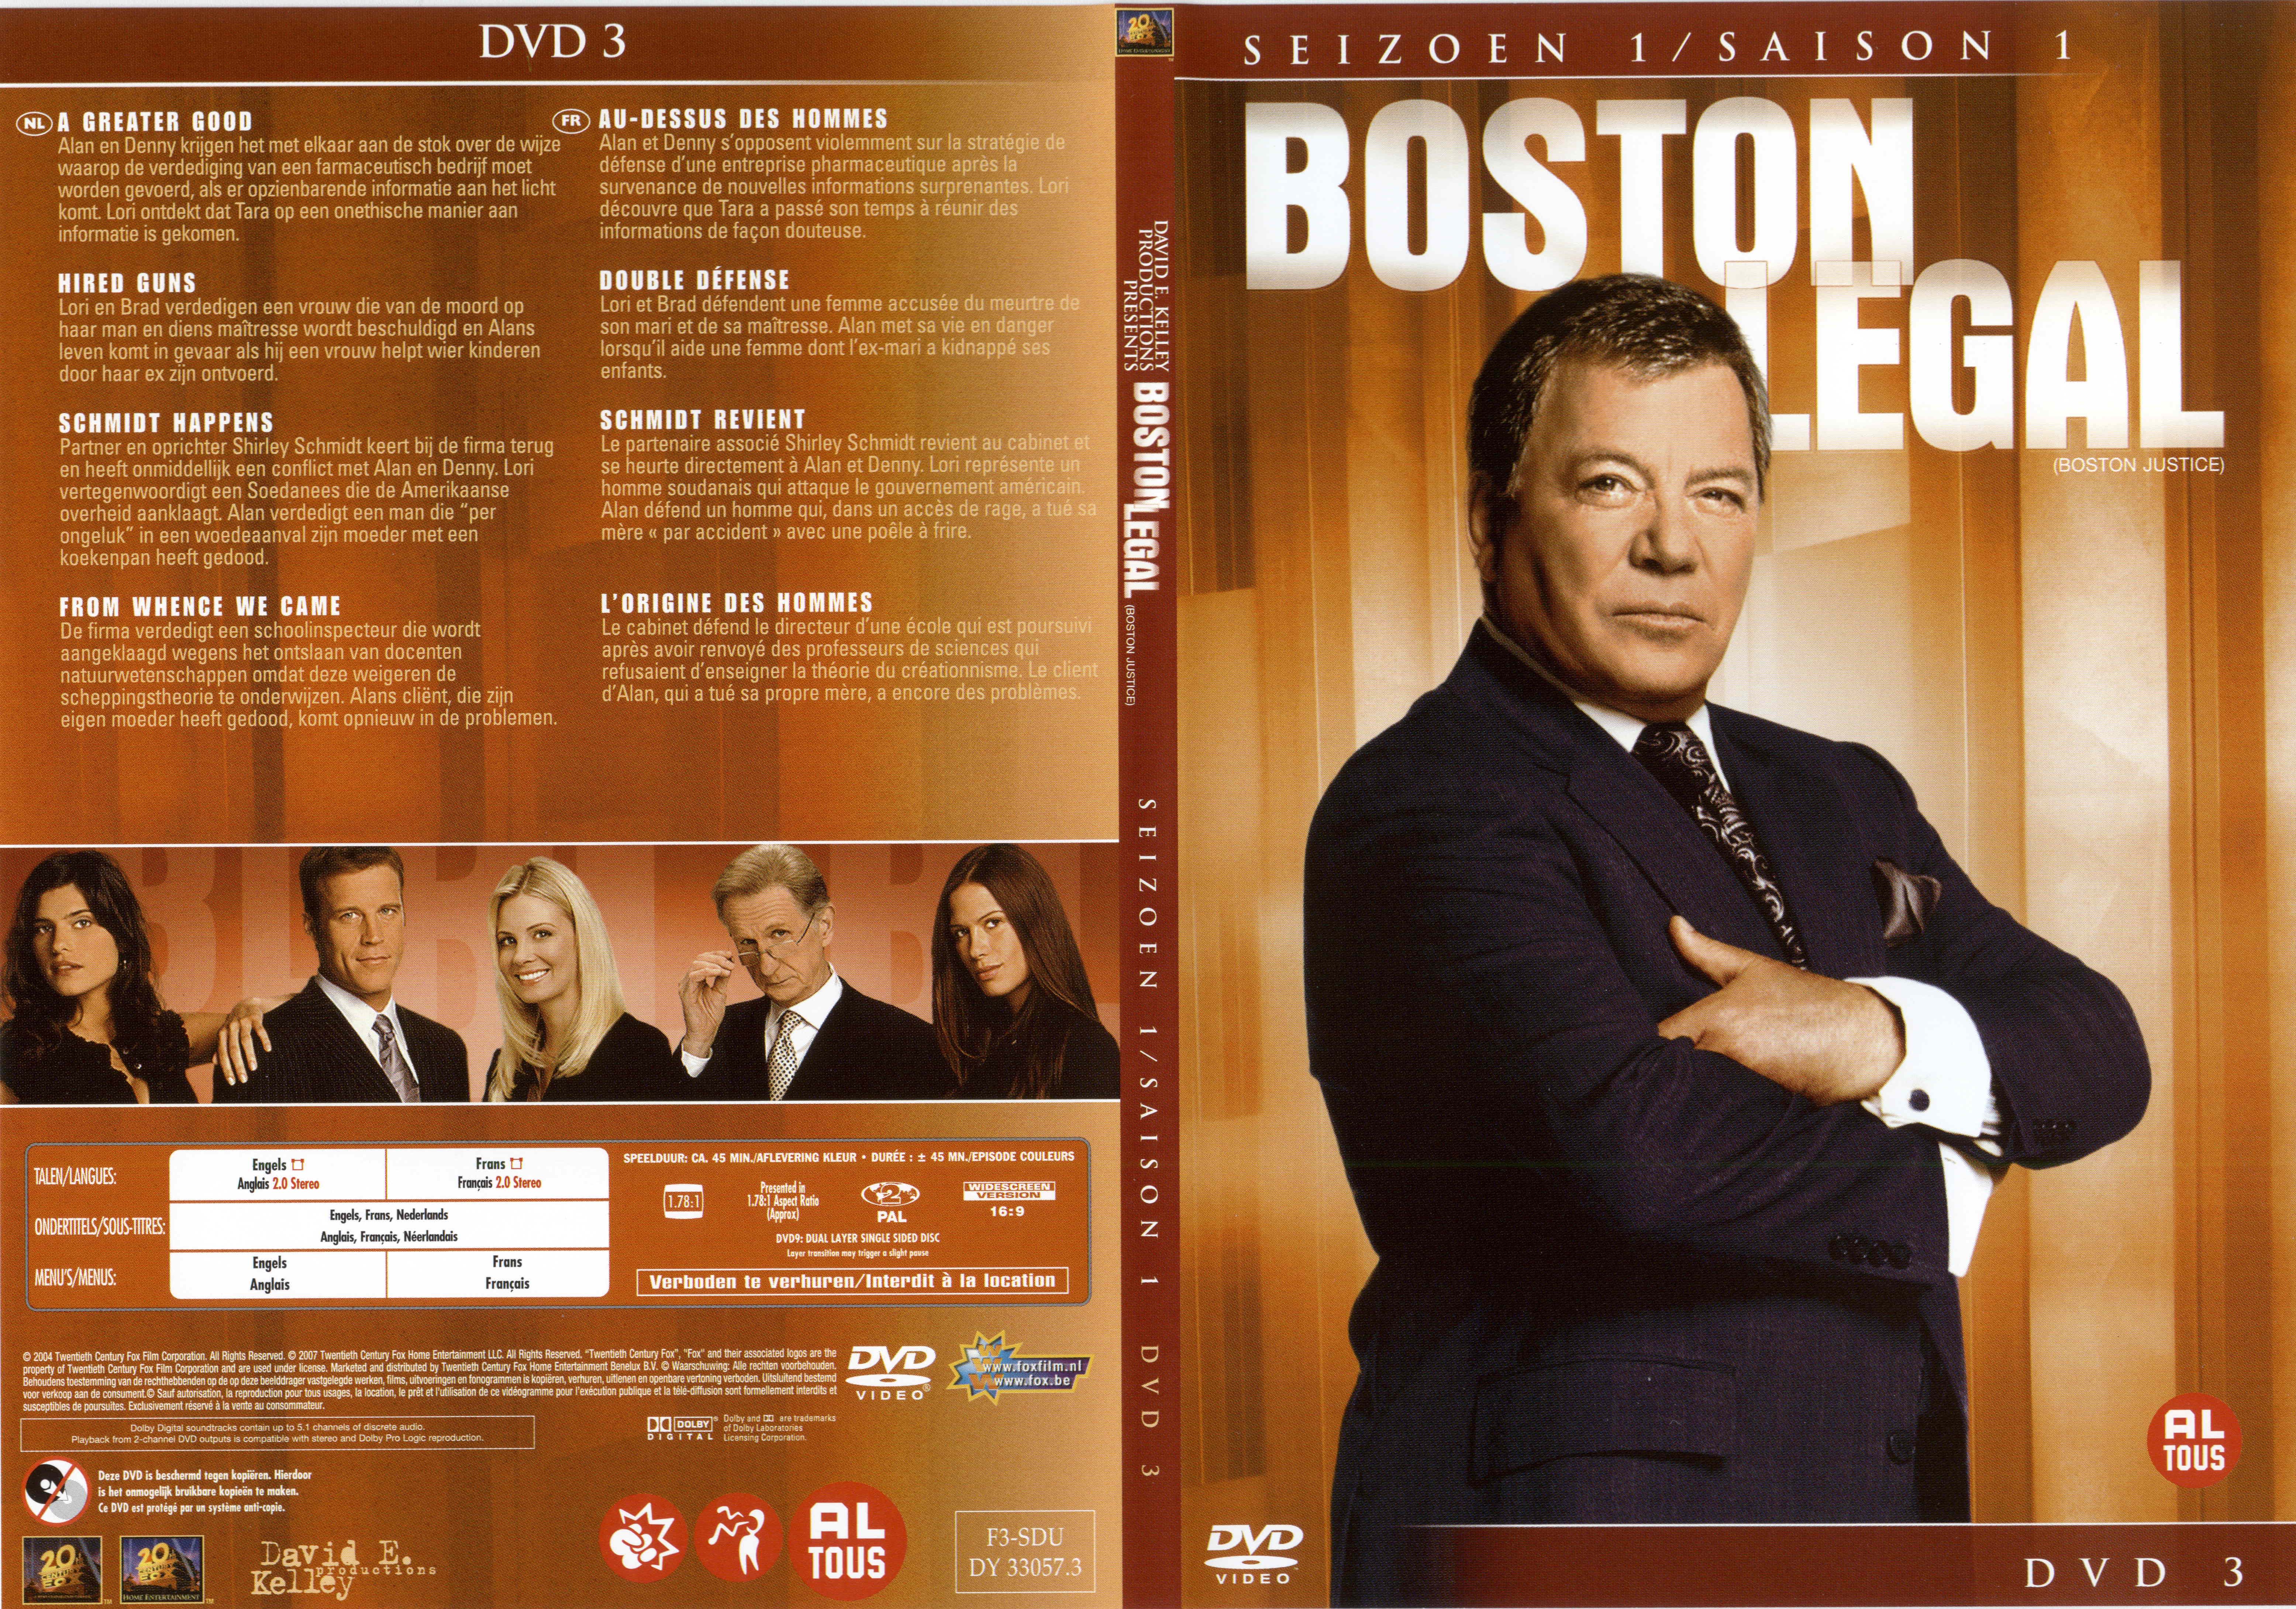 Jaquette DVD Boston legal - Boston justice Saison 1 DVD 3